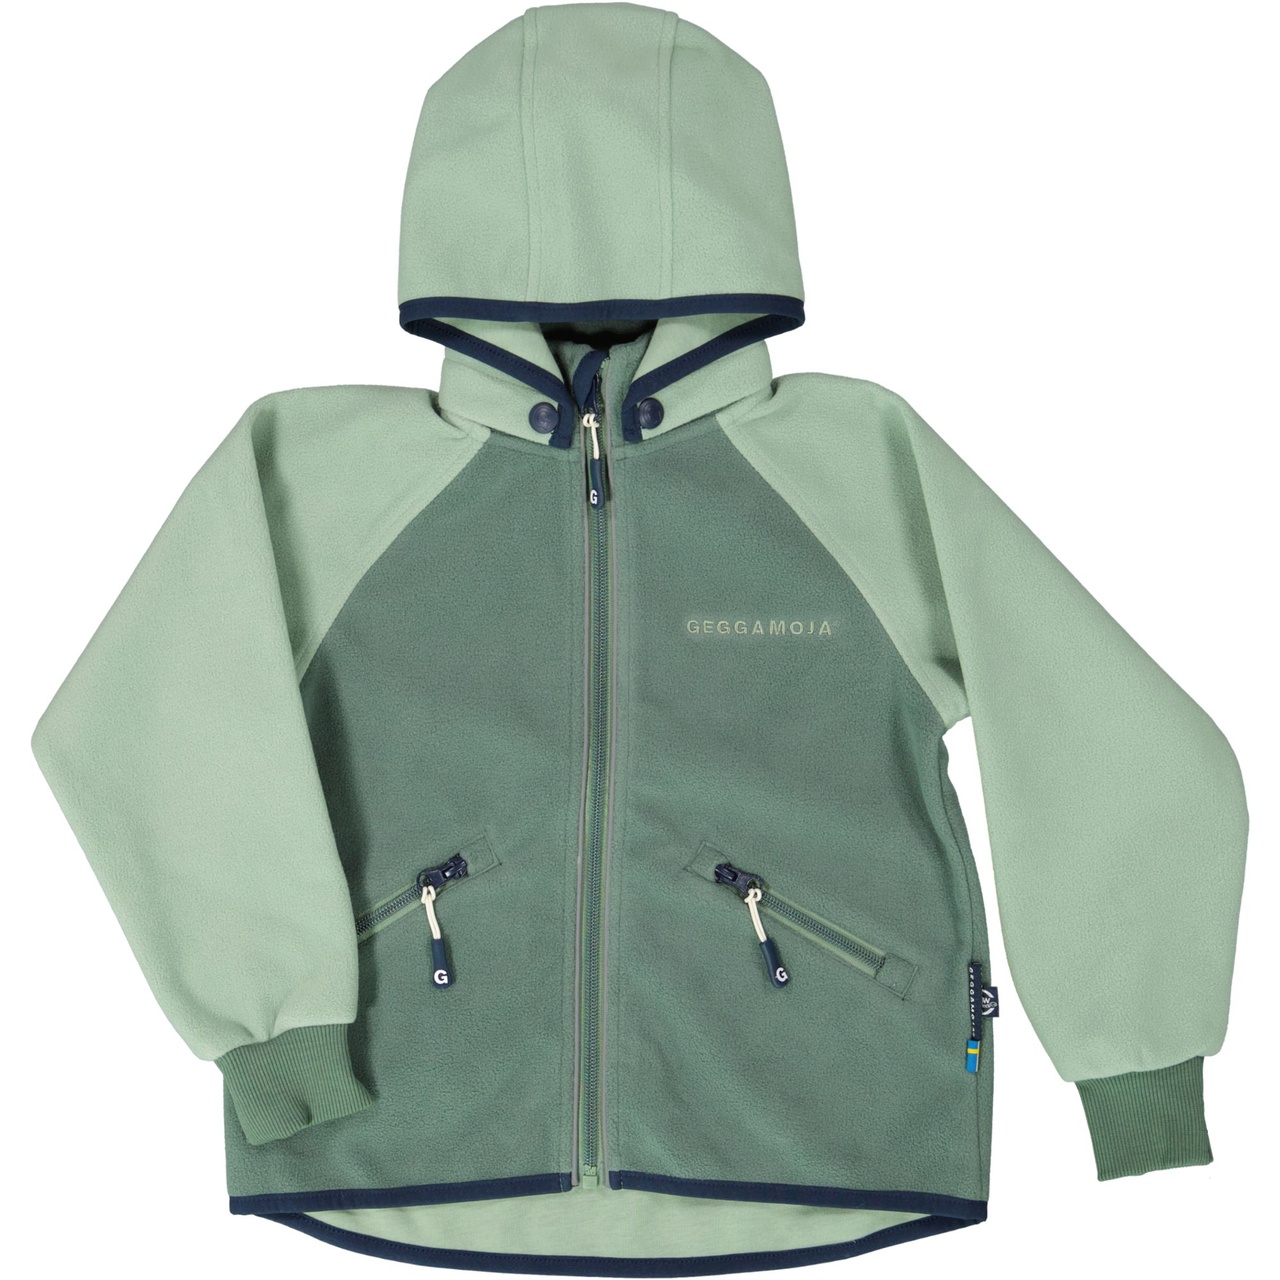 Wind fleece jacket Mossgreen 86/92